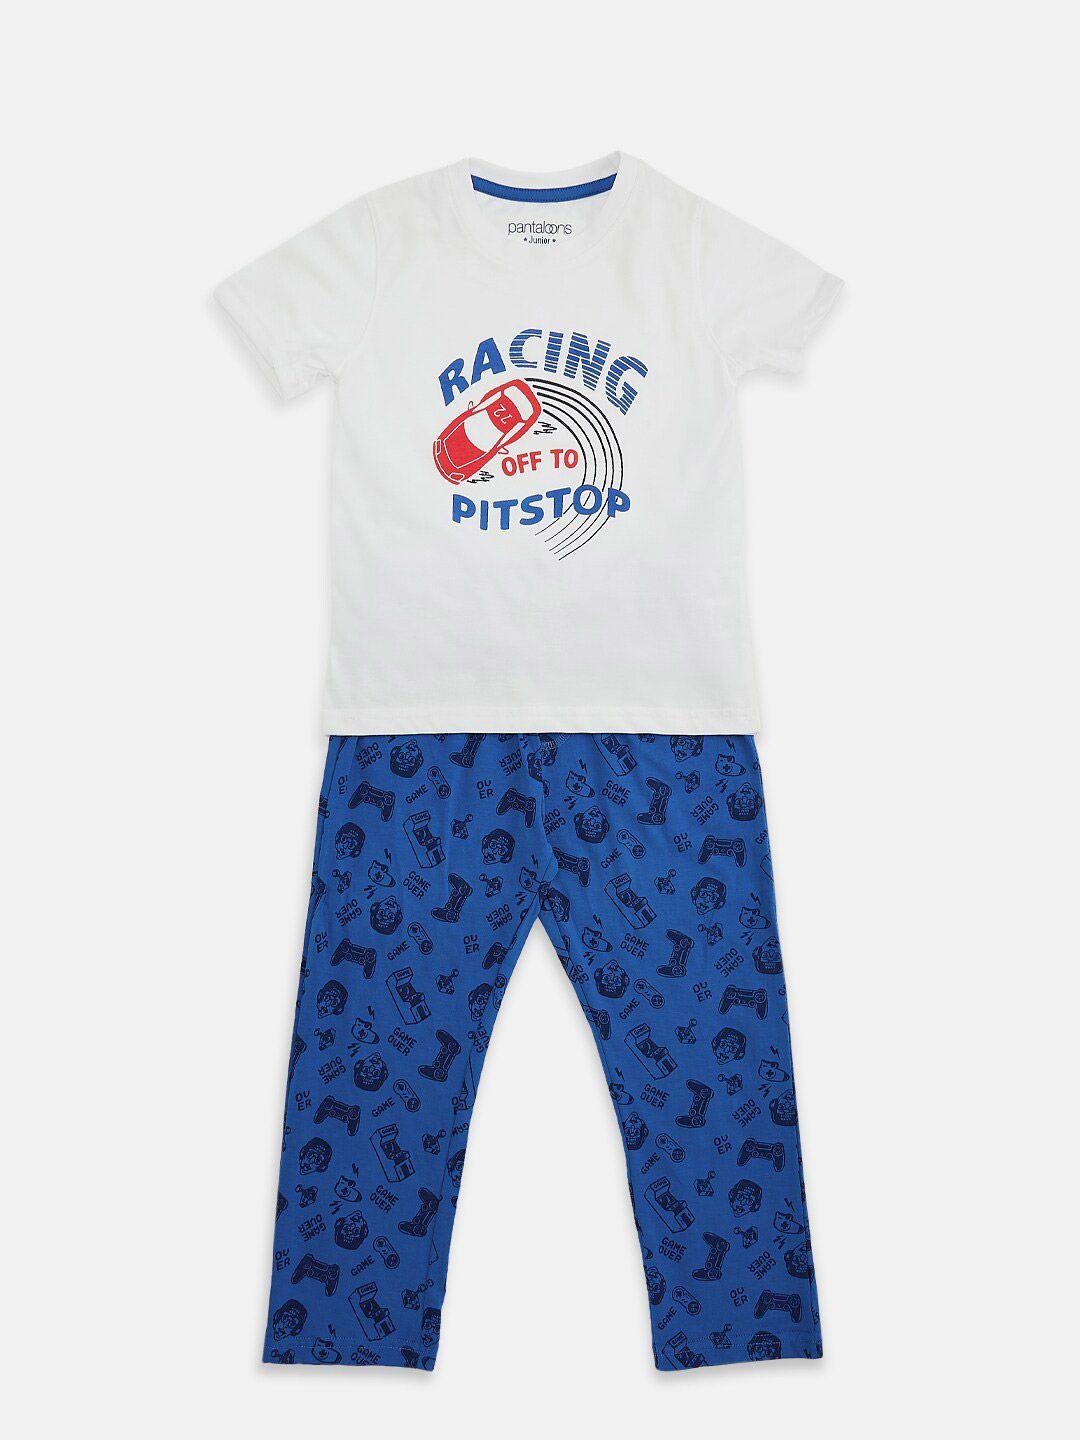 pantaloons junior boys grey melange & blue printed t-shirt with pyjamas